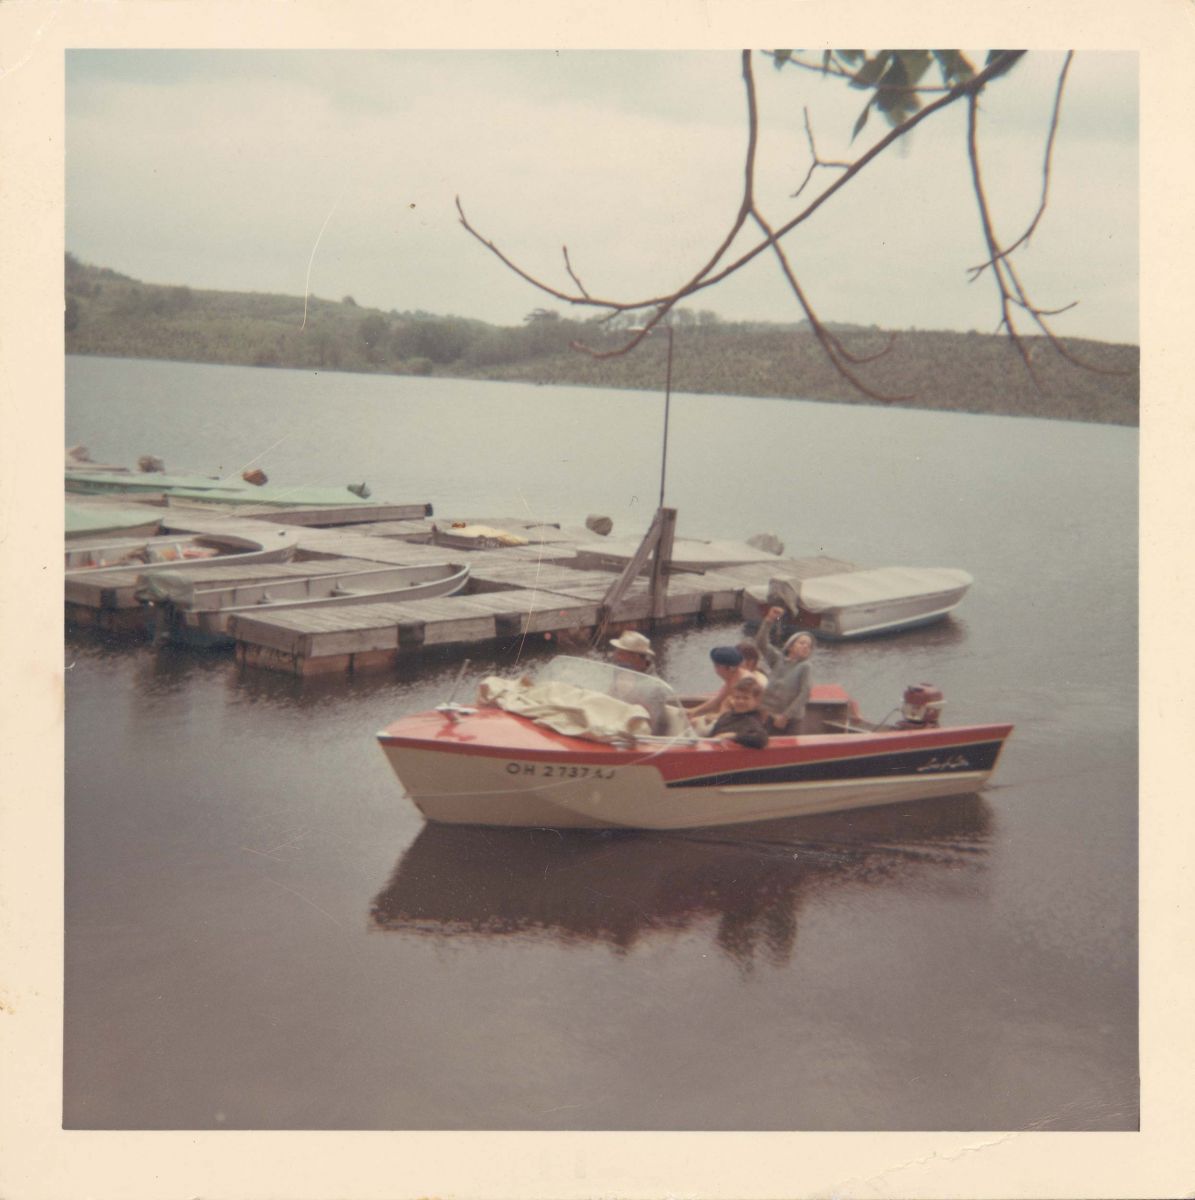 celuch-joseph-1960s-boat-mwcd.jpg